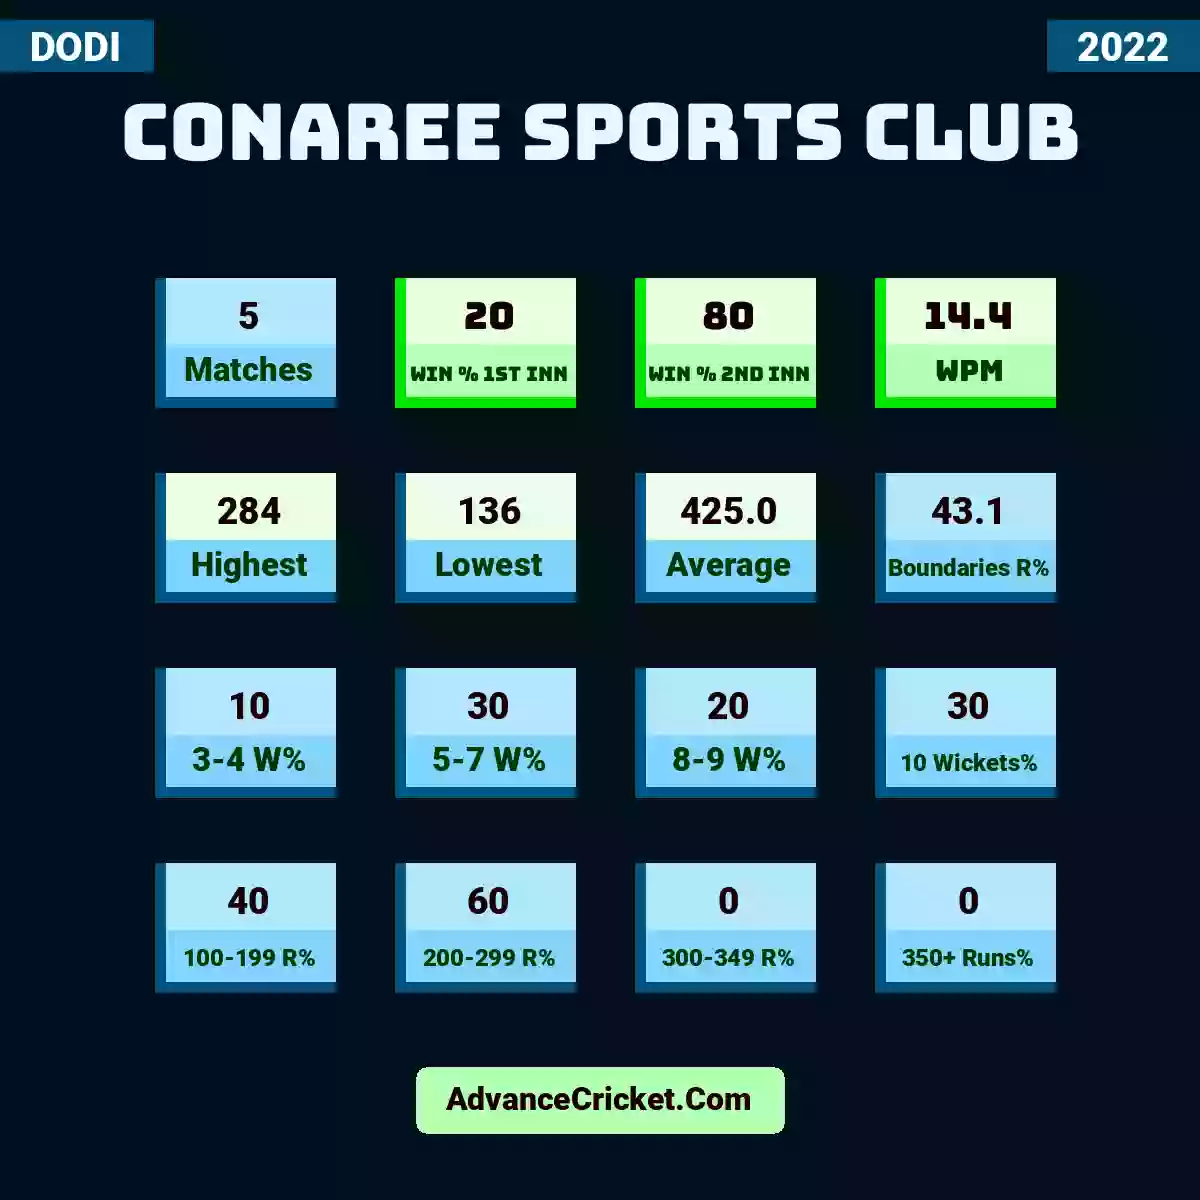 Image showing Conaree Sports Club with Matches: 5, Win % 1st Inn: 20, Win % 2nd Inn: 80, WPM: 14.4, Highest: 284, Lowest: 136, Average: 425.0, Boundaries R%: 43.1, 3-4 W%: 10, 5-7 W%: 30, 8-9 W%: 20, 10 Wickets%: 30, 100-199 R%: 40, 200-299 R%: 60, 300-349 R%: 0, 350+ Runs%: 0.